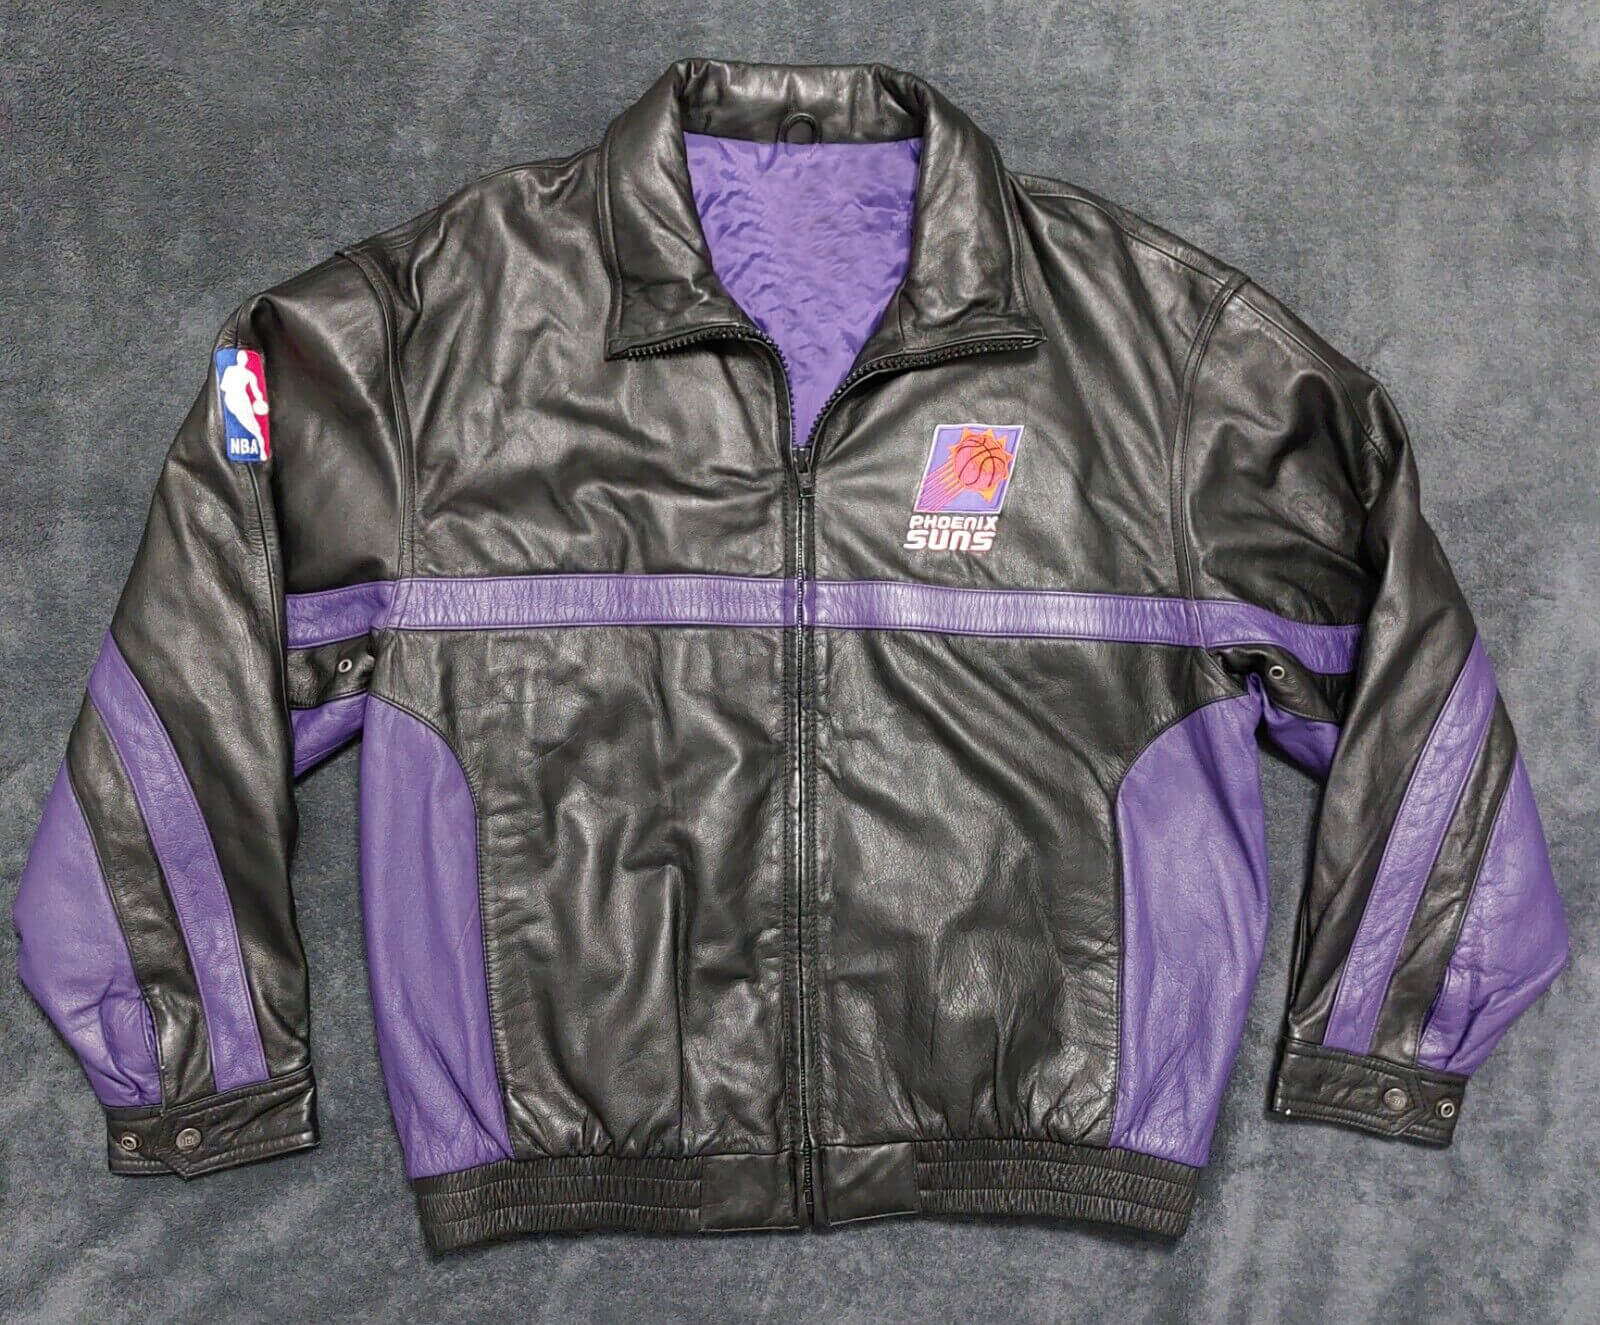 Maker of Jacket Fashion Jackets Retro NBA Phoenix Suns Multi